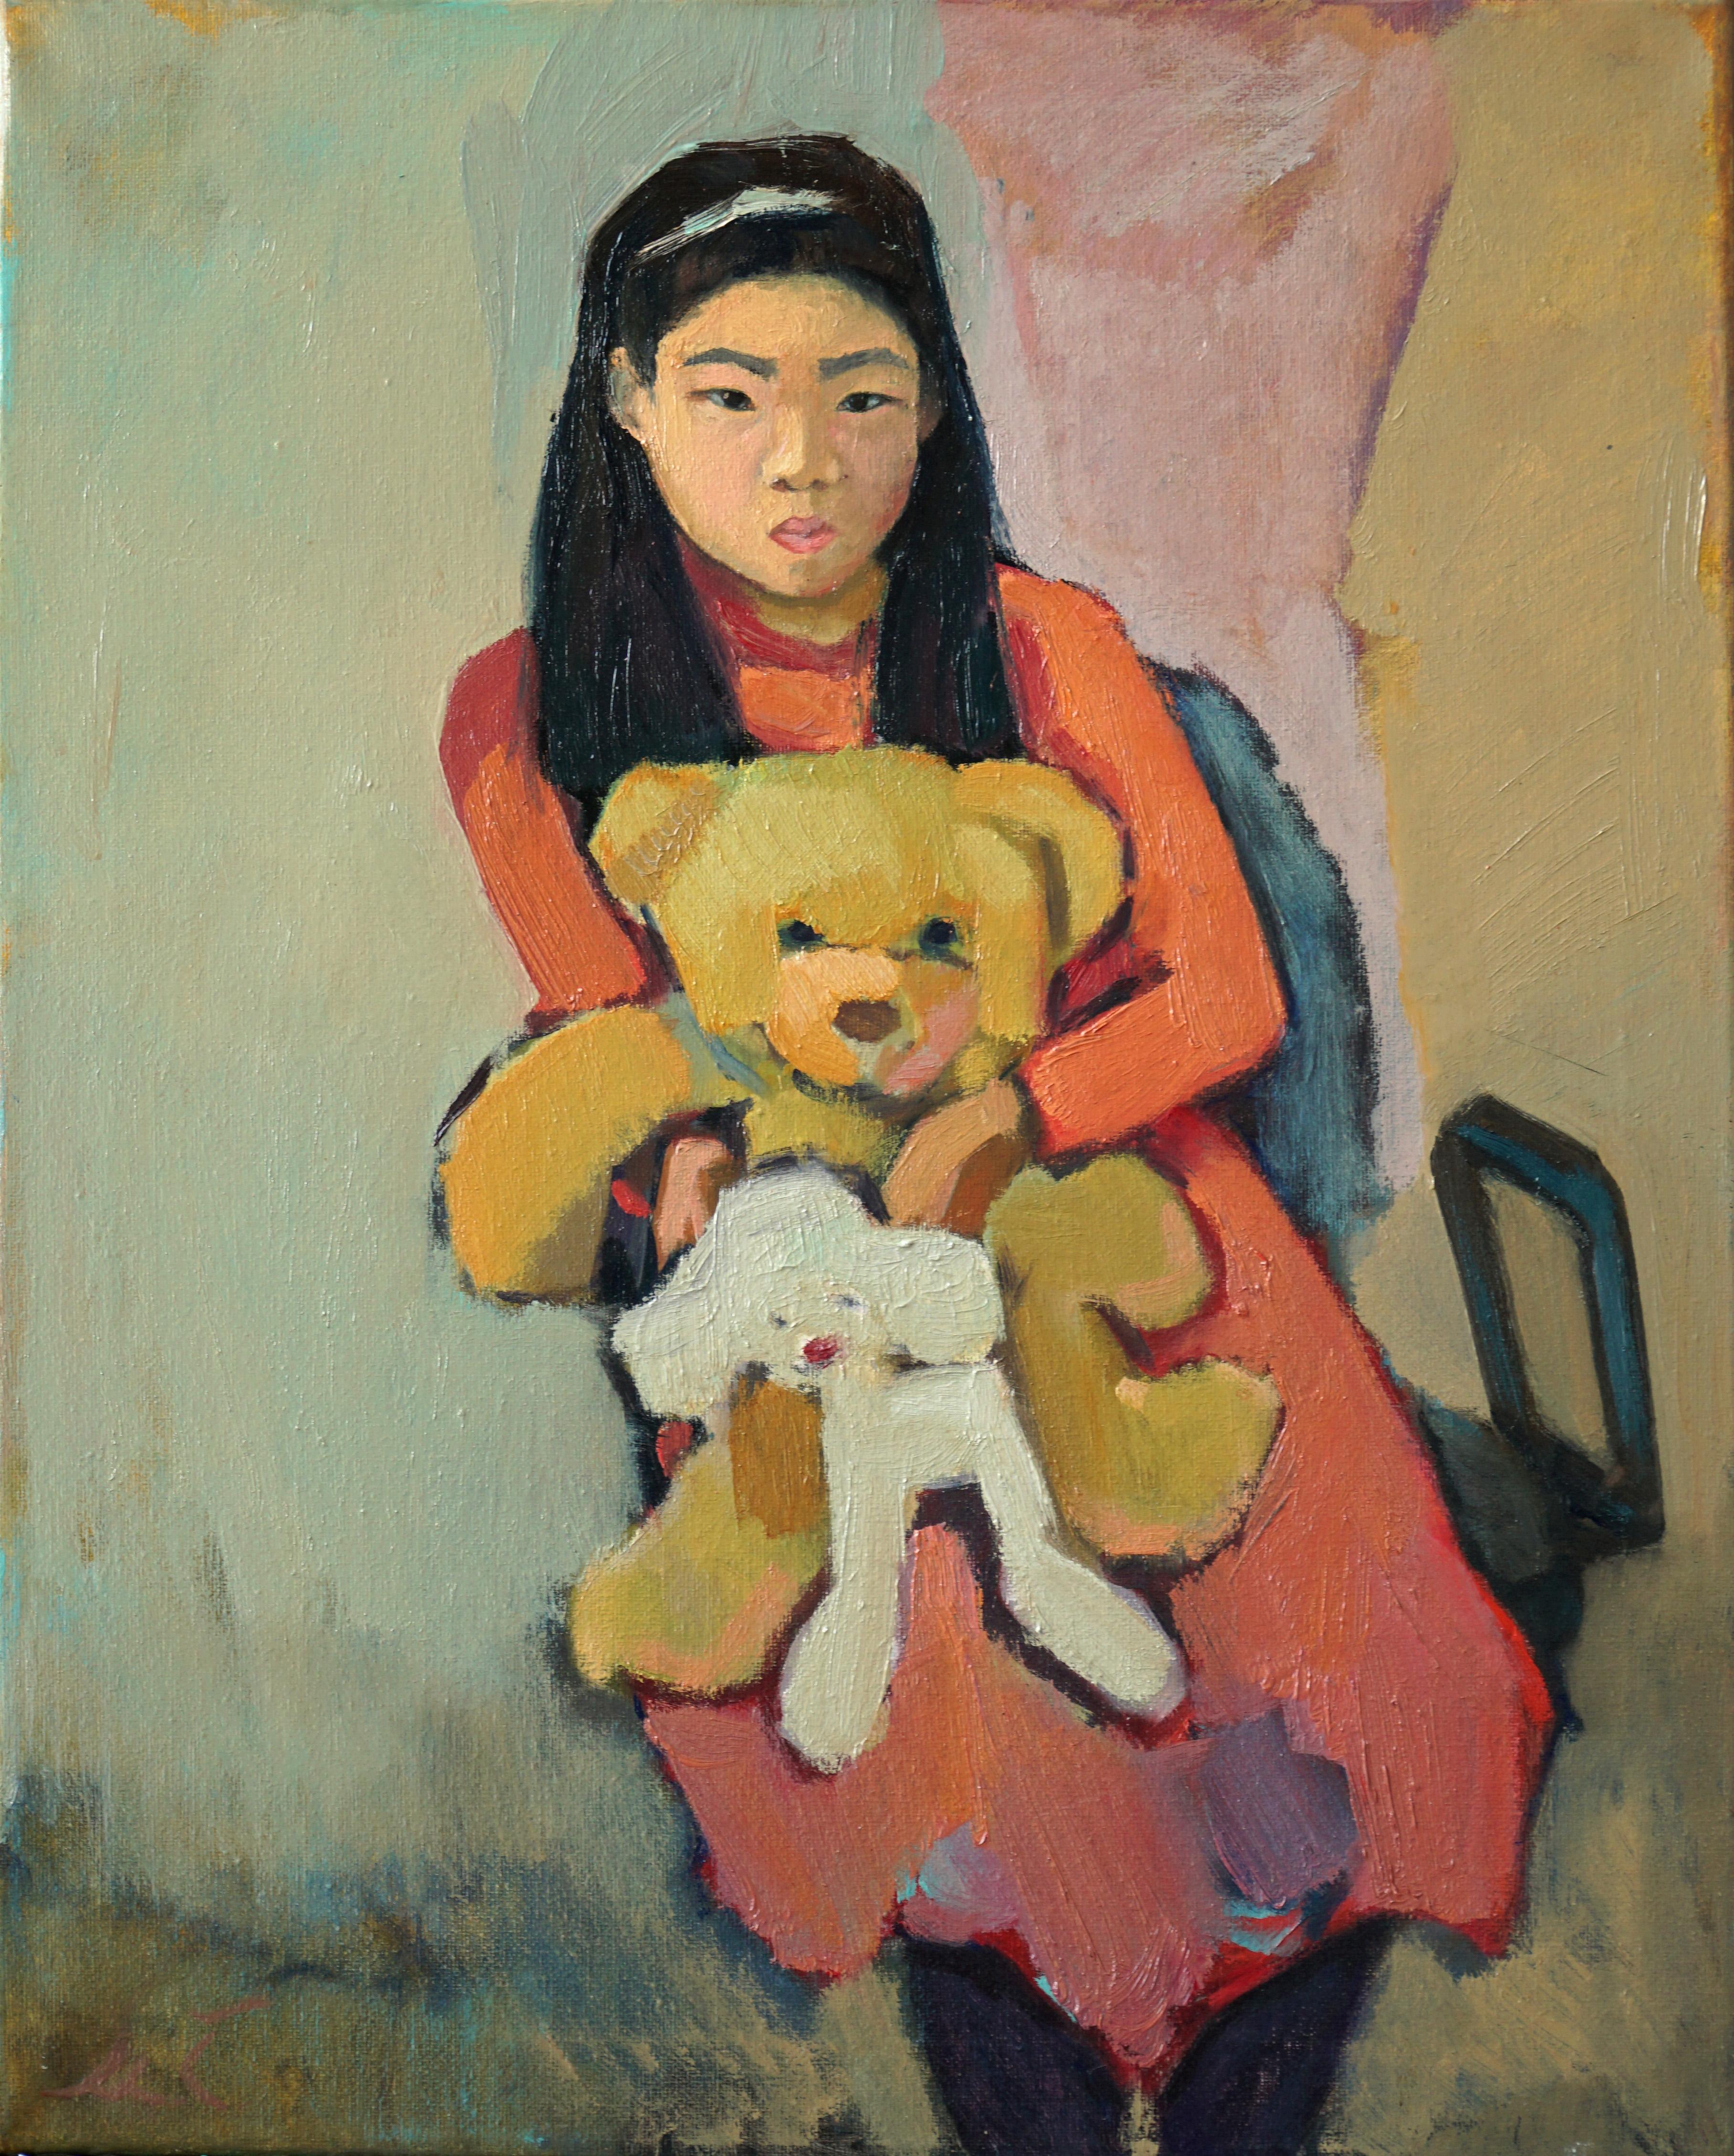 Asian girl portrait Teddy bear innocence toys pink soft colors fine art classic